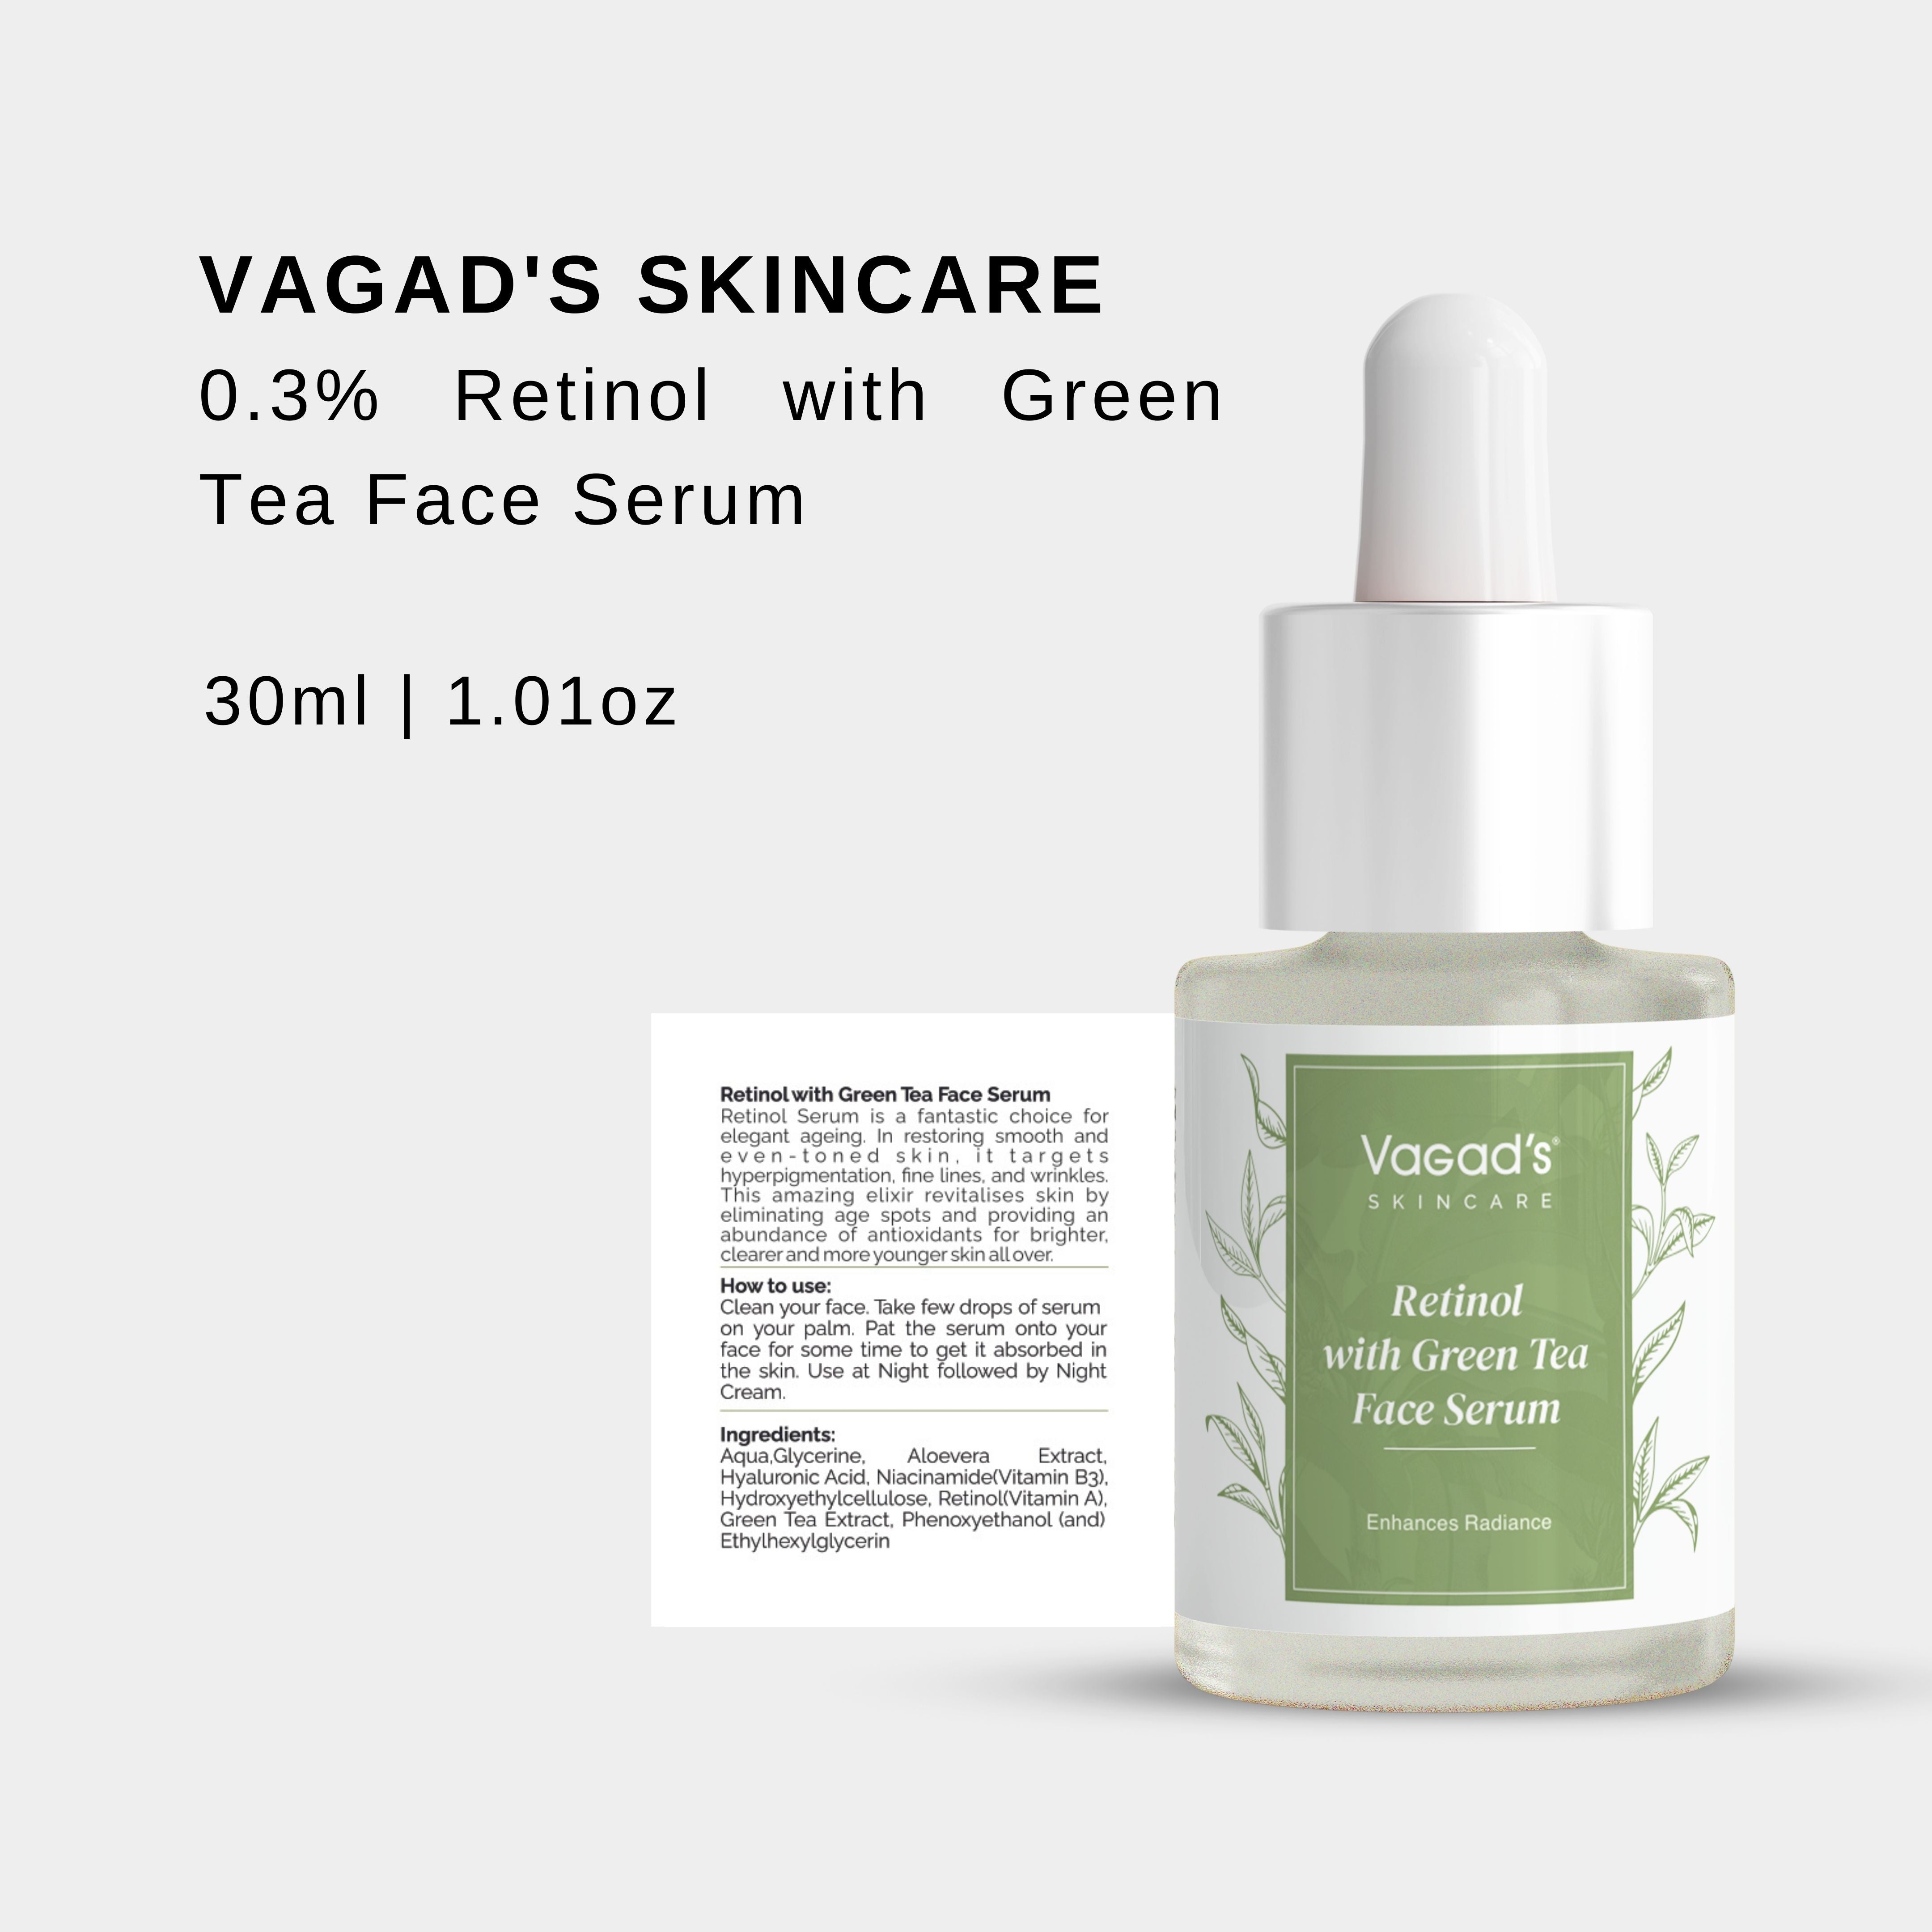 0.3% Retinol with Green Tea Face Serum with anti-ageing properties, 30ml